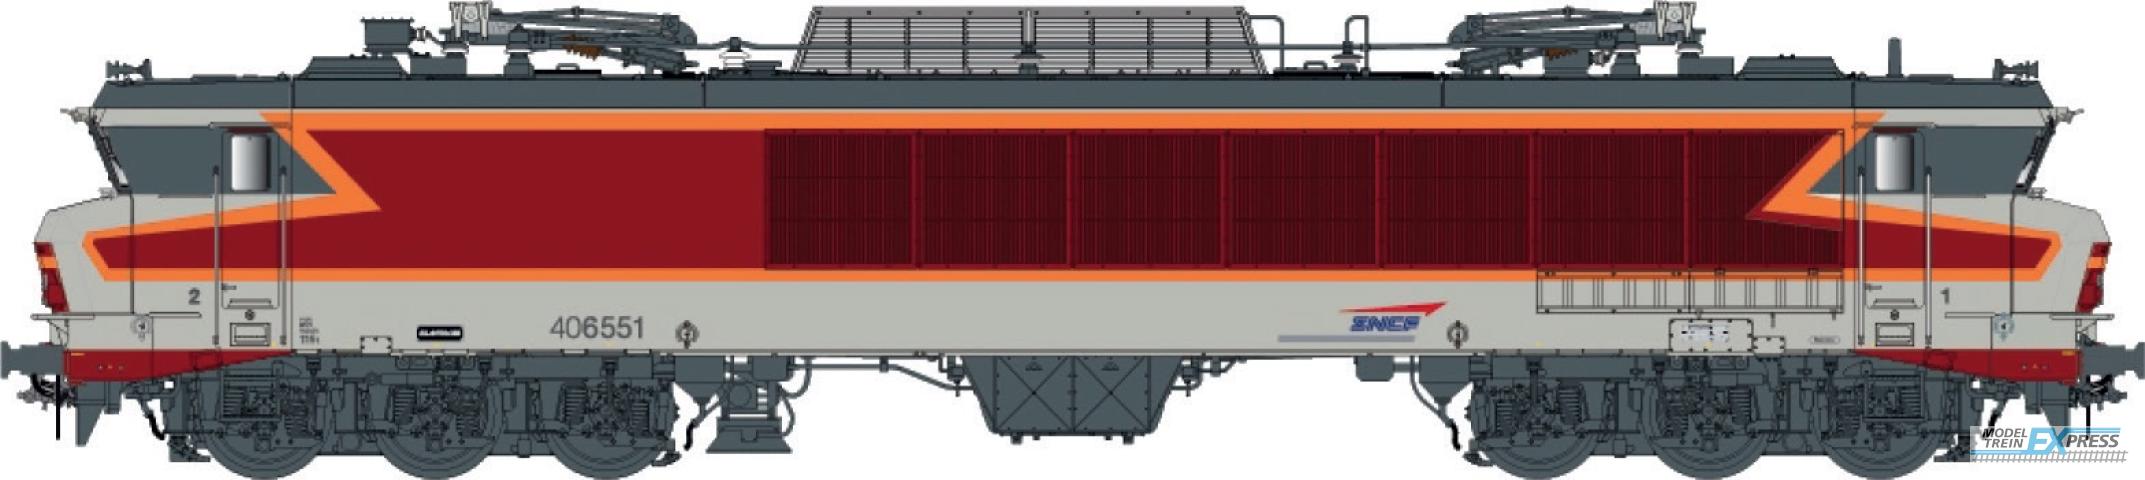 LS Models 10818 CC 6551, grey/red/orange, livery ARZENS, logo cap,Vénissieux depot  /  Ep. V  /  SNCF  /  HO  /  AC  /  1 P.